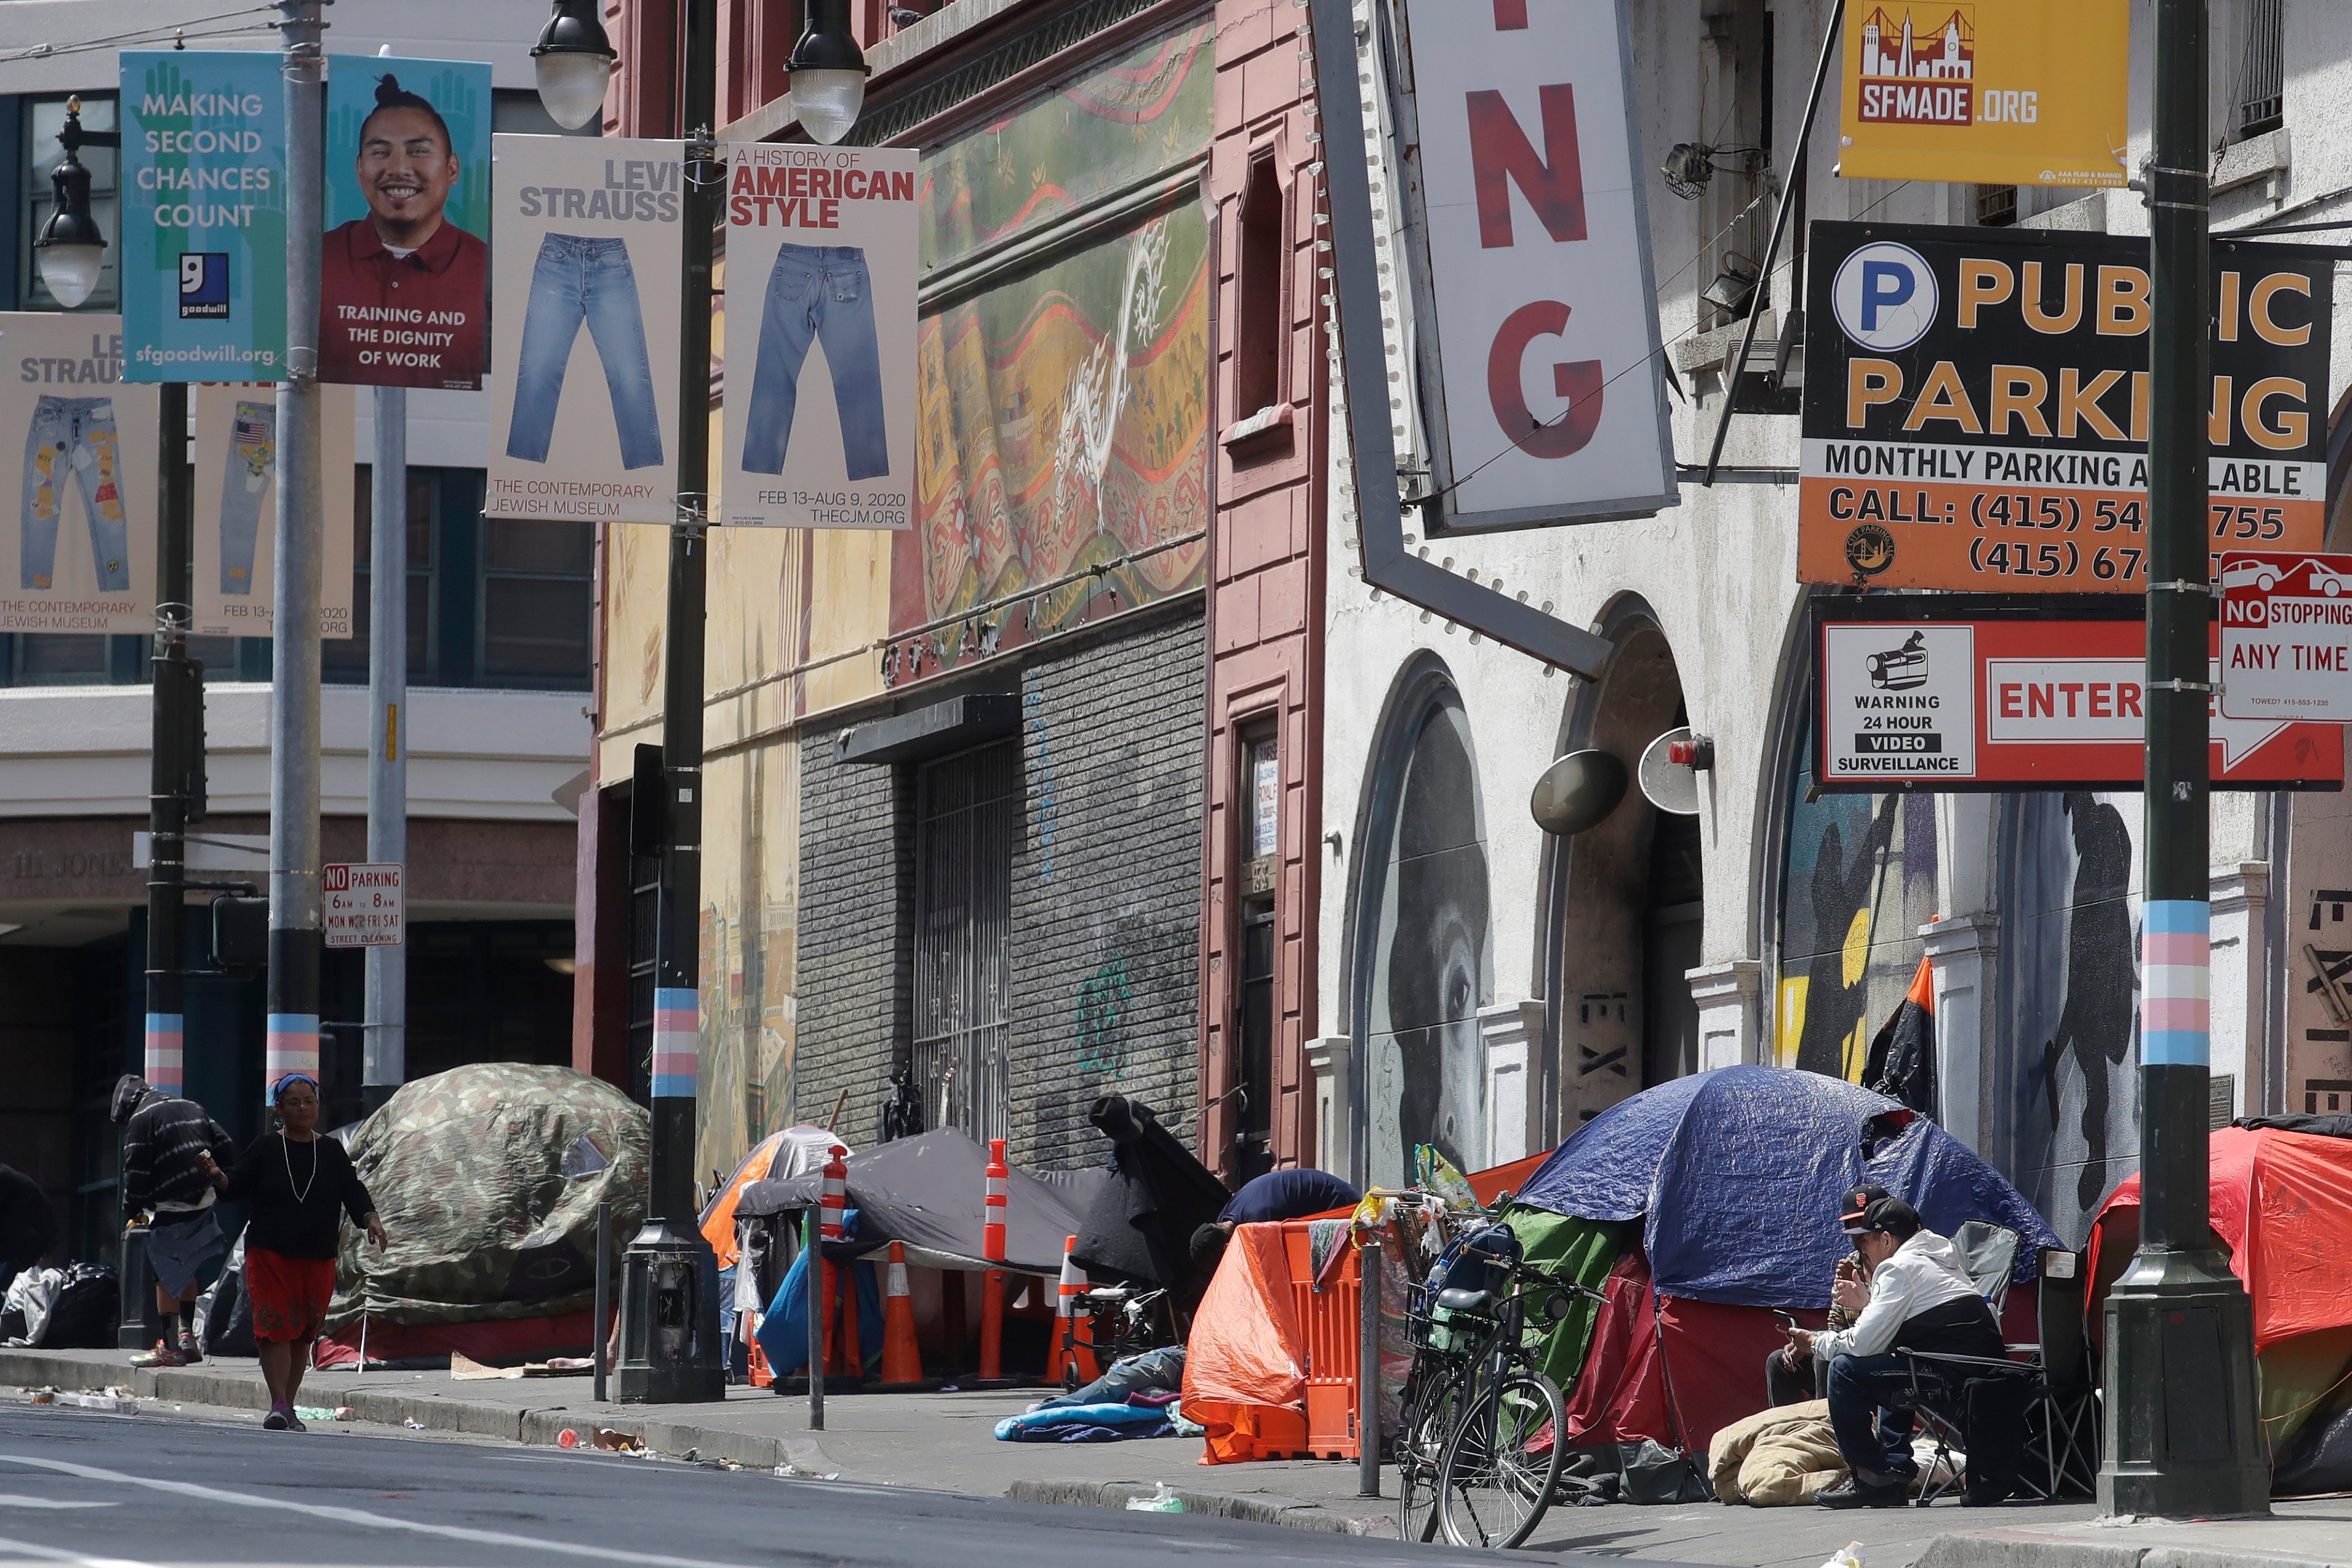 A long homeless encampment on a city street.